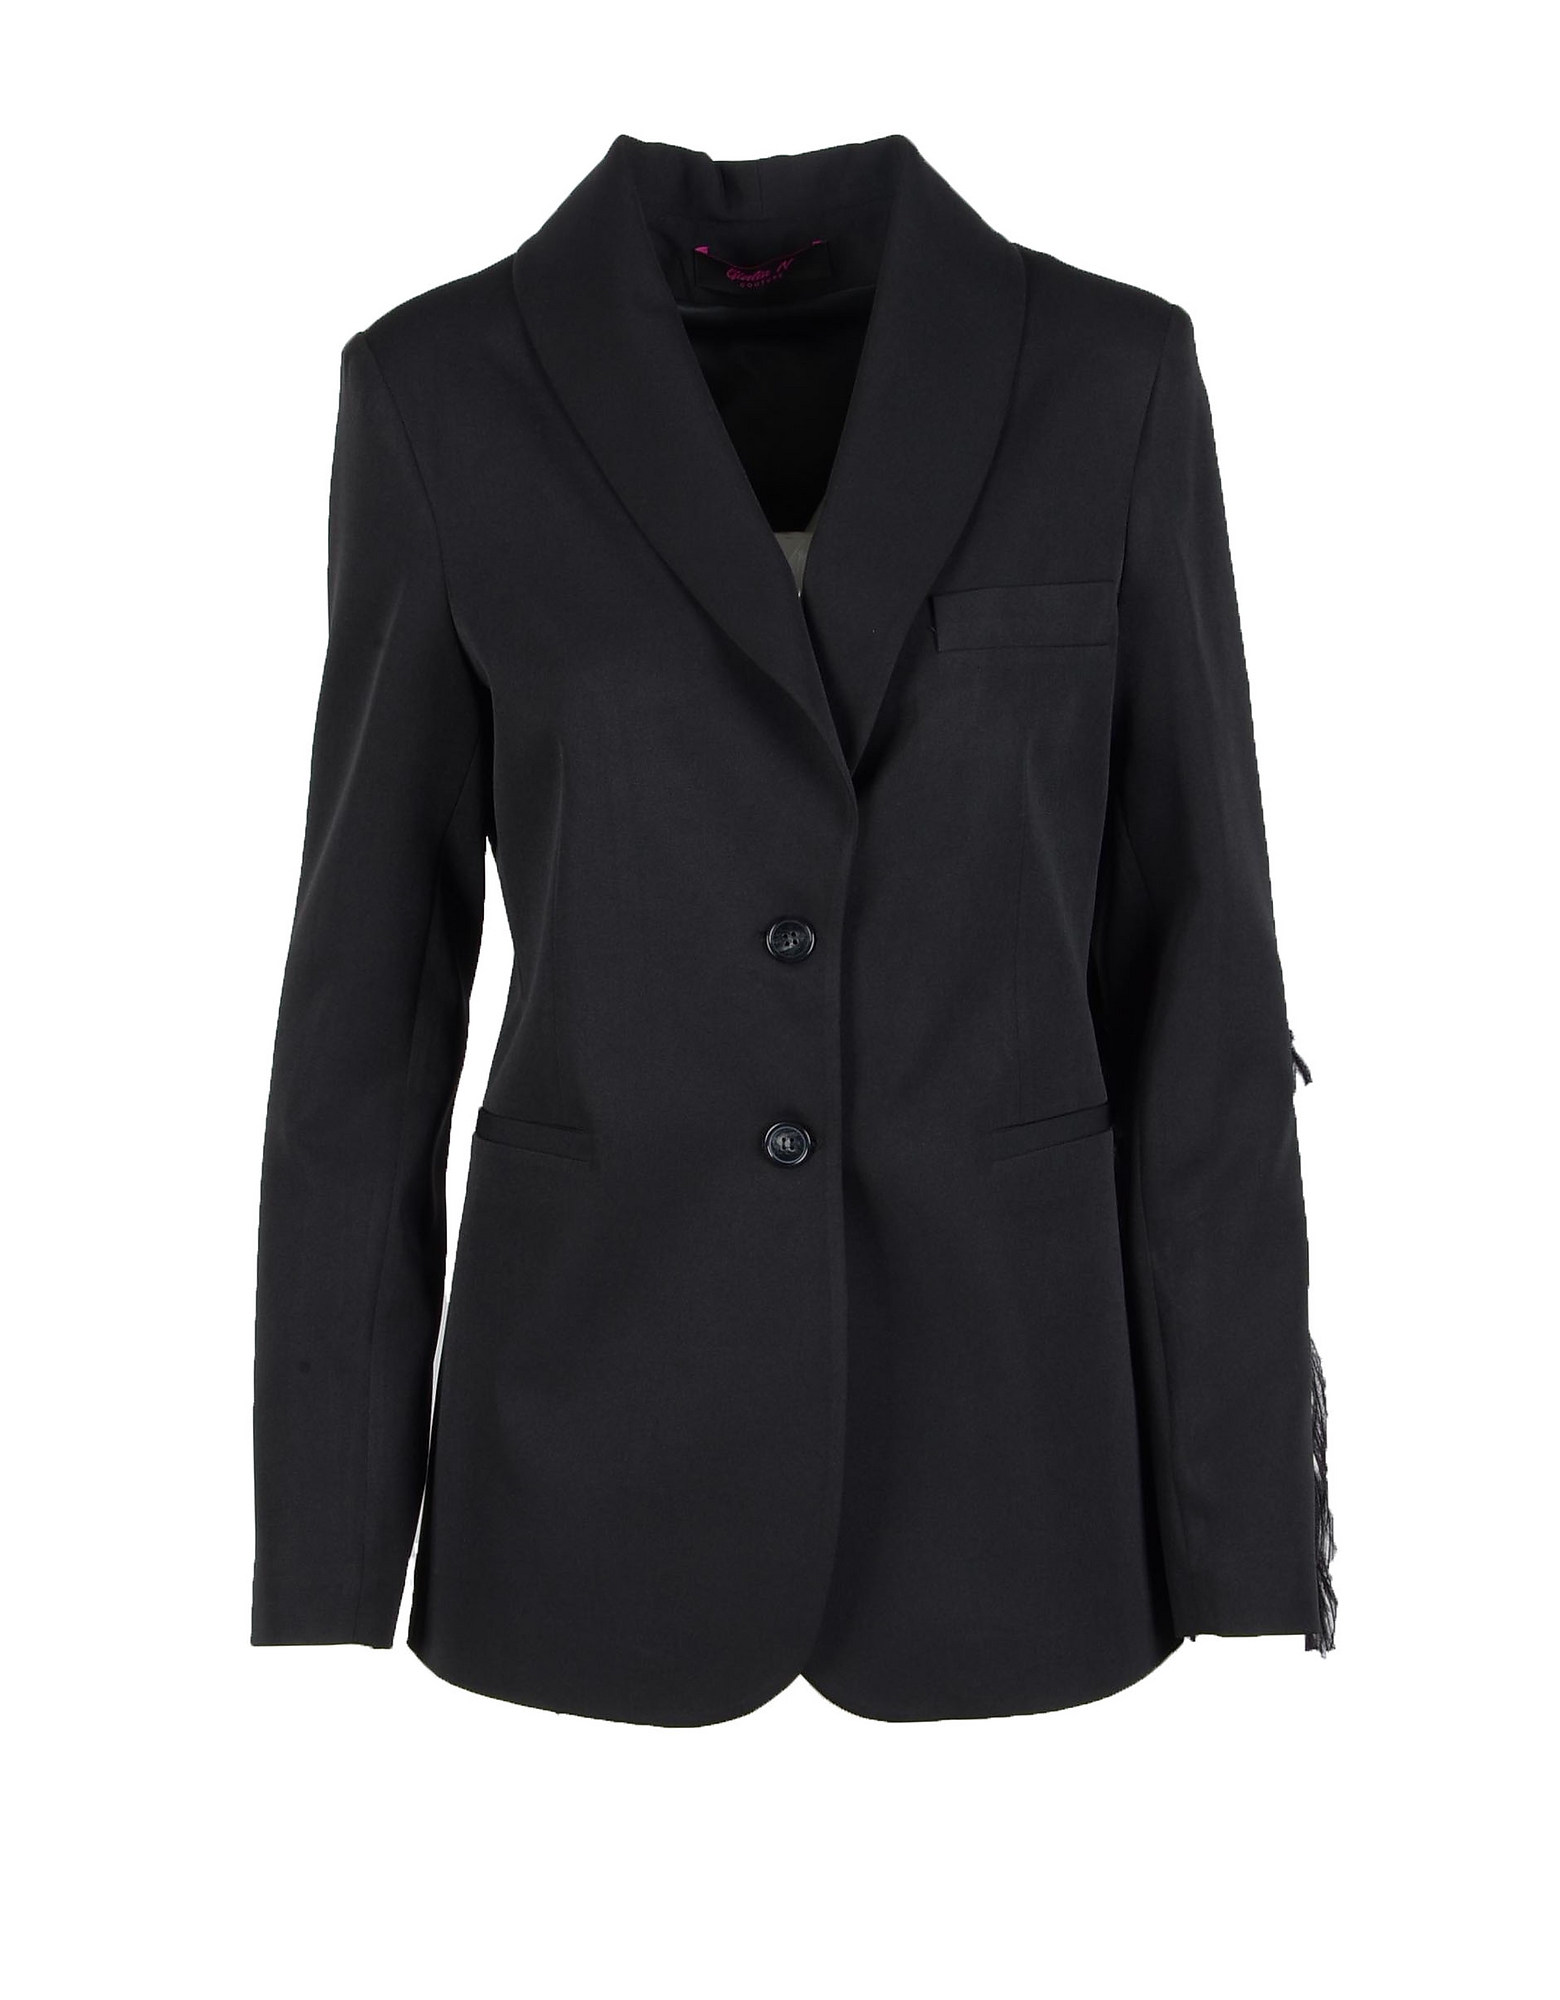 Giulia N  Coats & Jackets Women's Black Blazer